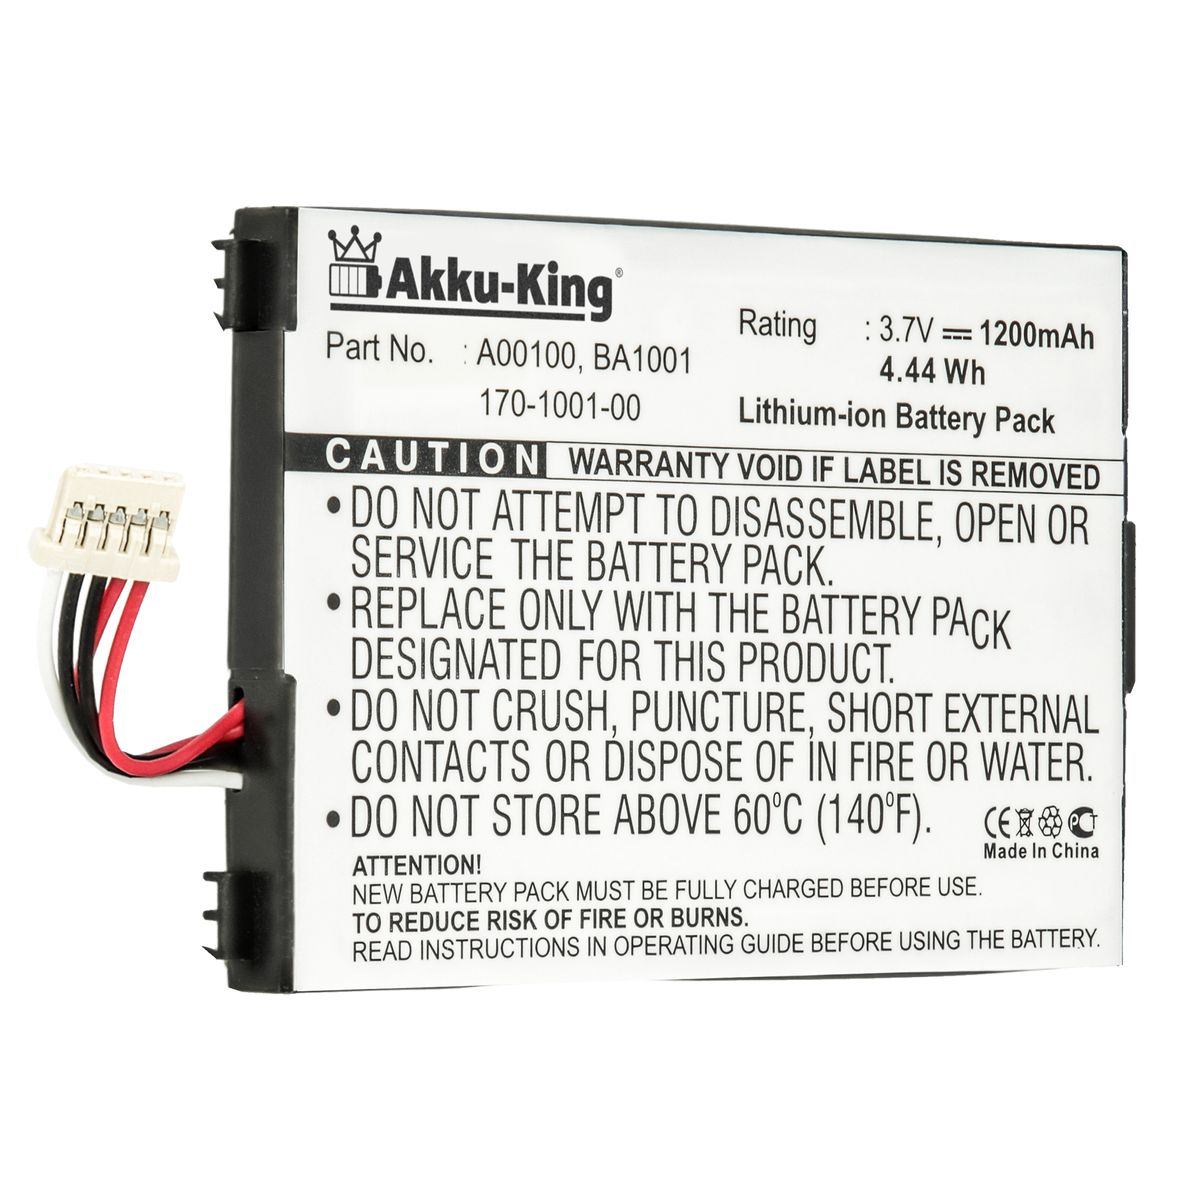 AKKU-KING BA1001 Volt, Akku kompatibel 1200mAh Geräte-Akku, mit 3.7 Li-Ion Amazon